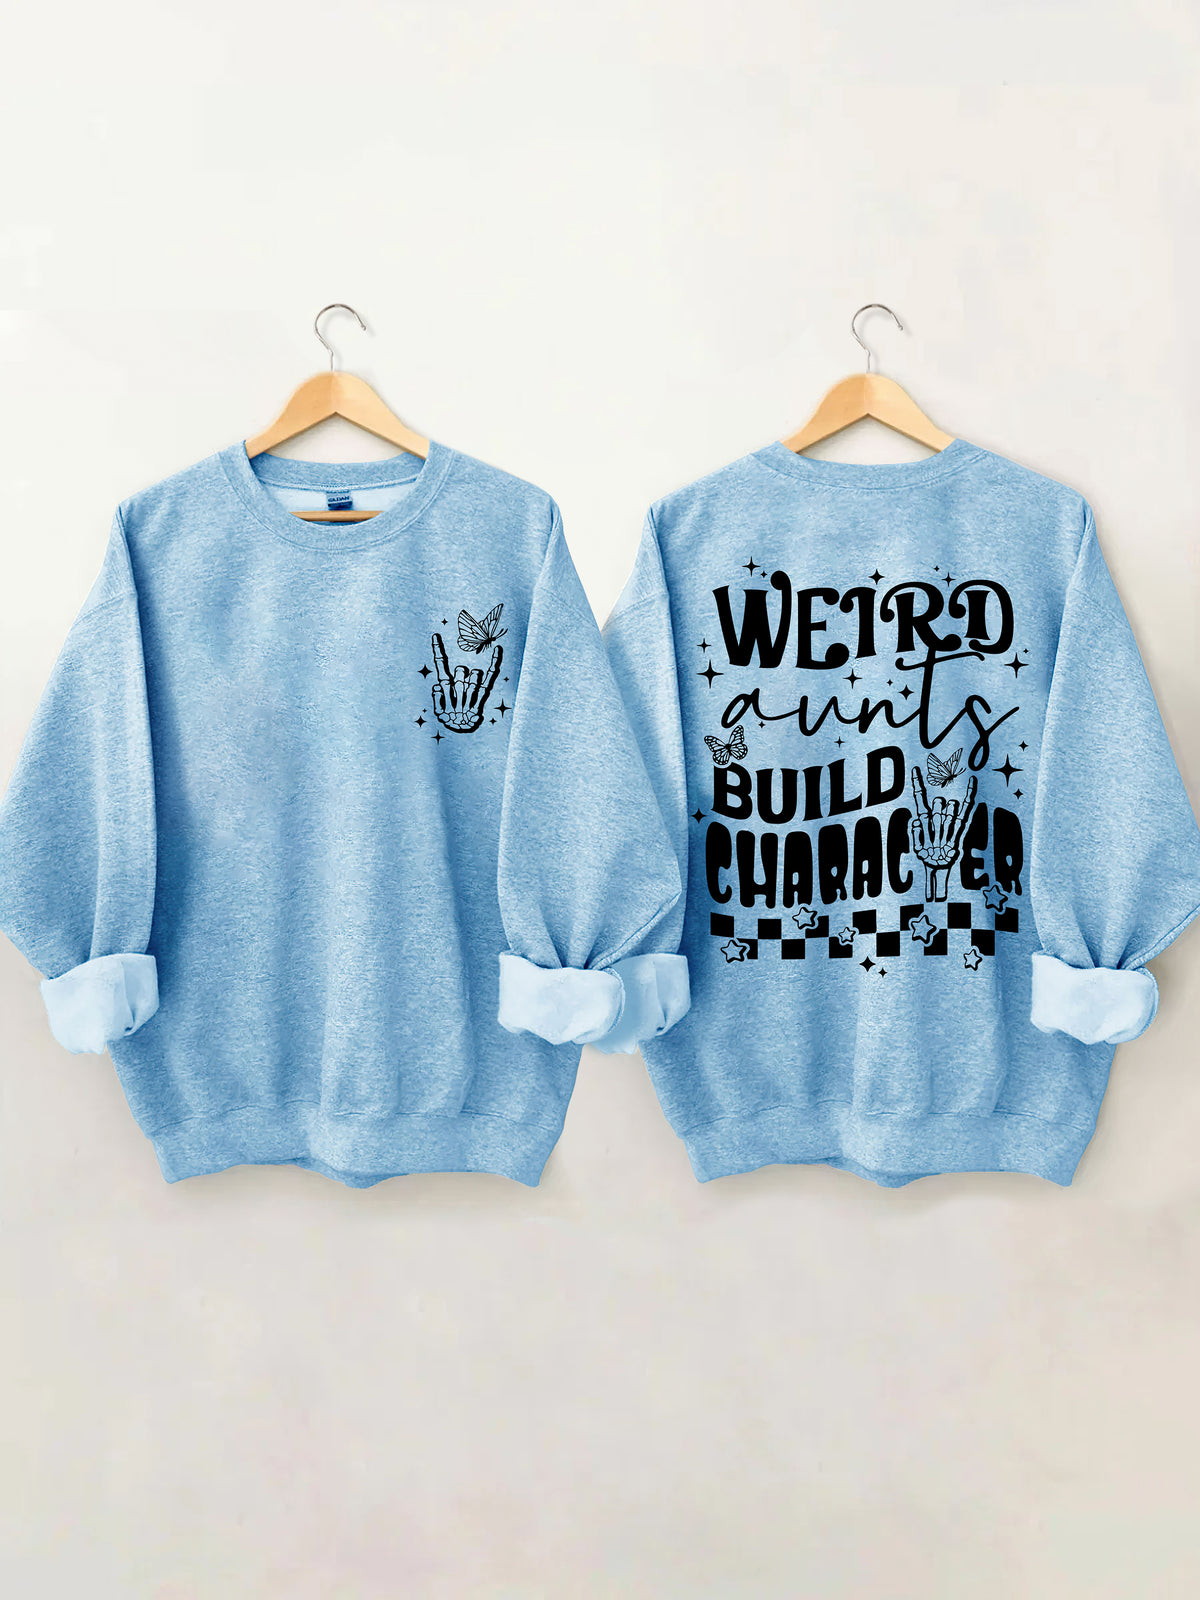 Weird Aunts Build Charakter Sweatshirt 